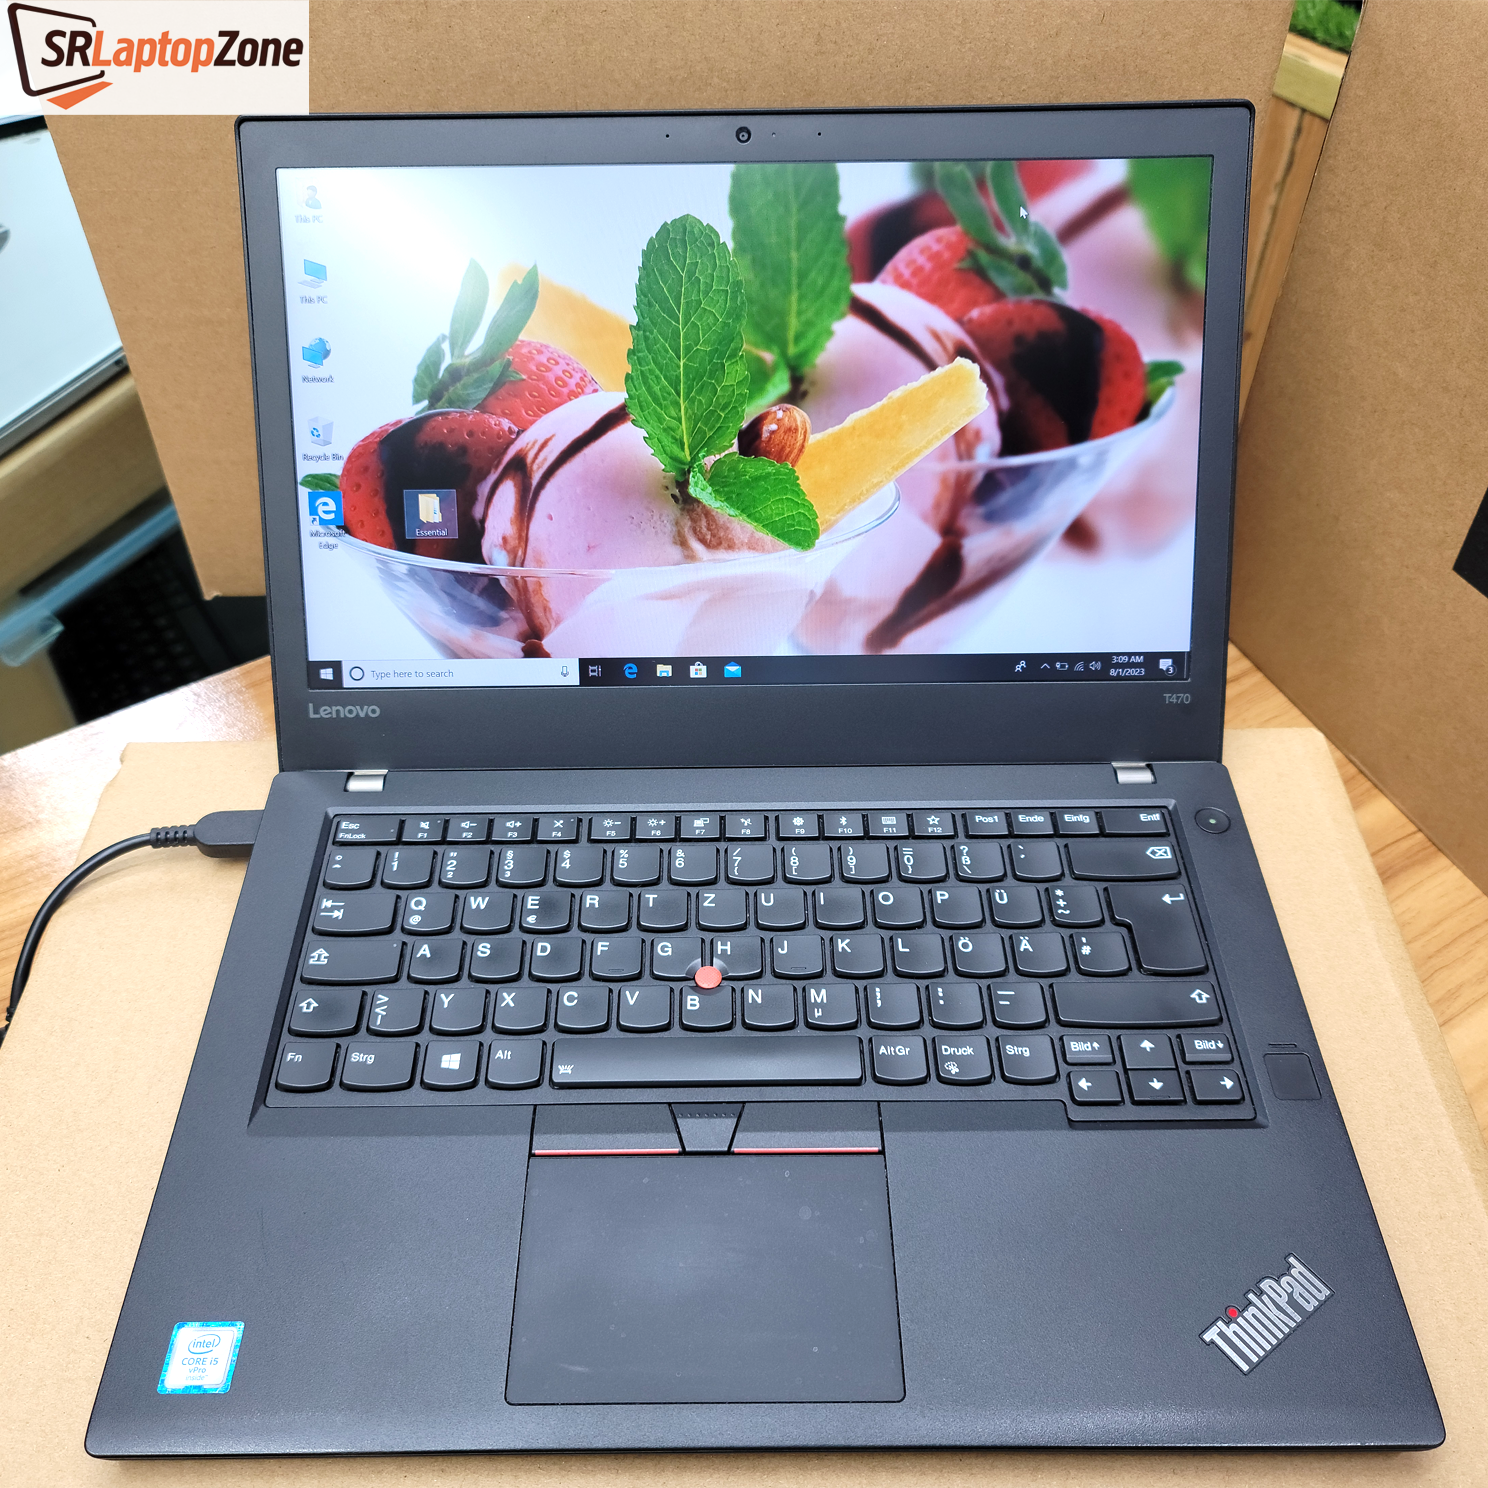 Lenovo Thinkpad T470 Core i5 6th Gen, Ram 8 Gb, SSD 256 Gb, Display 14" FHD Bussiness Class Laptop